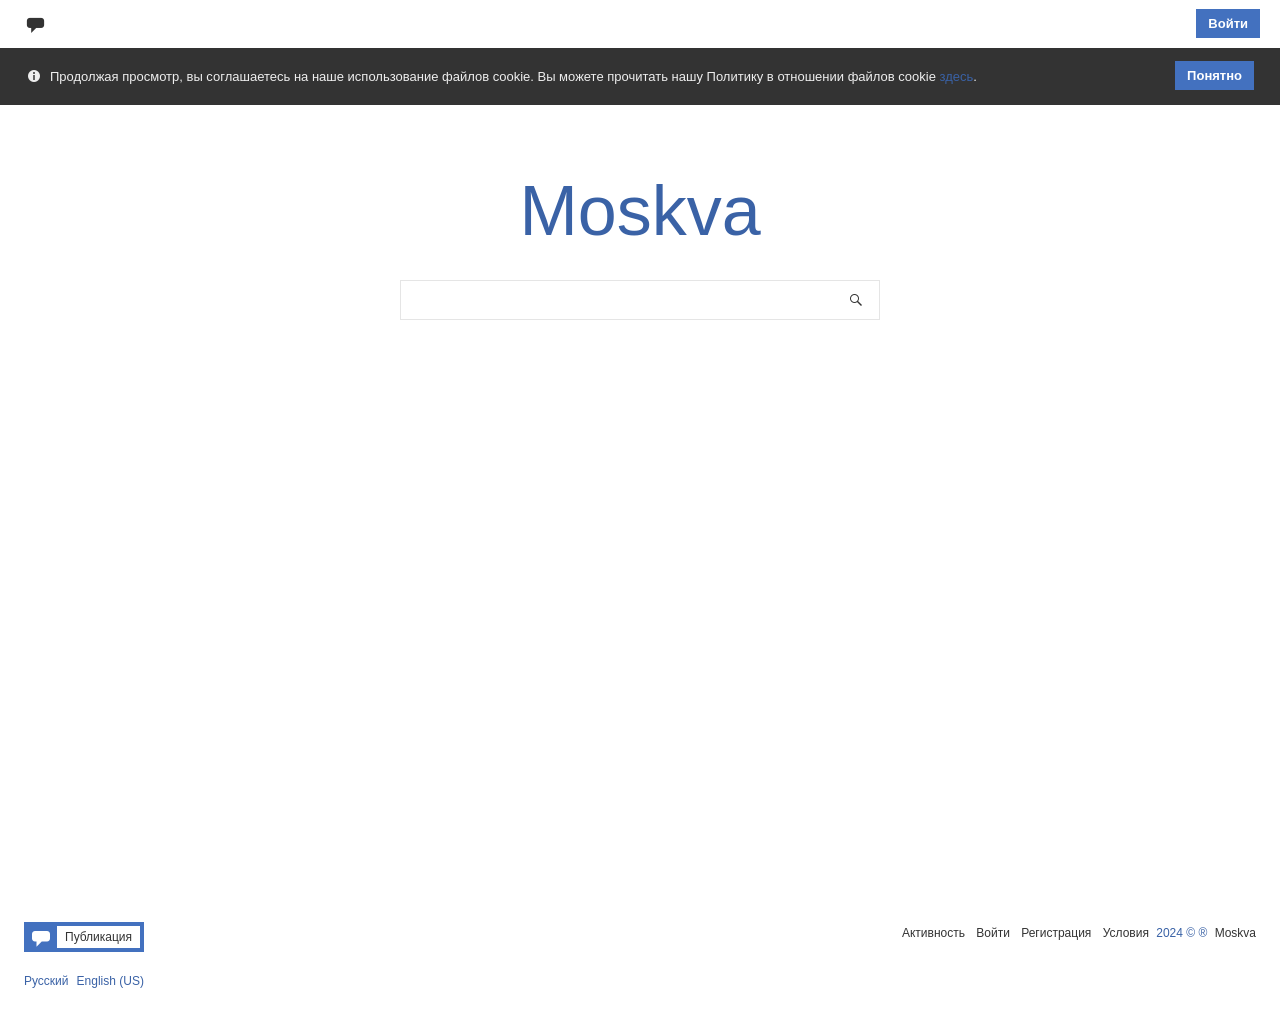 moskva.com